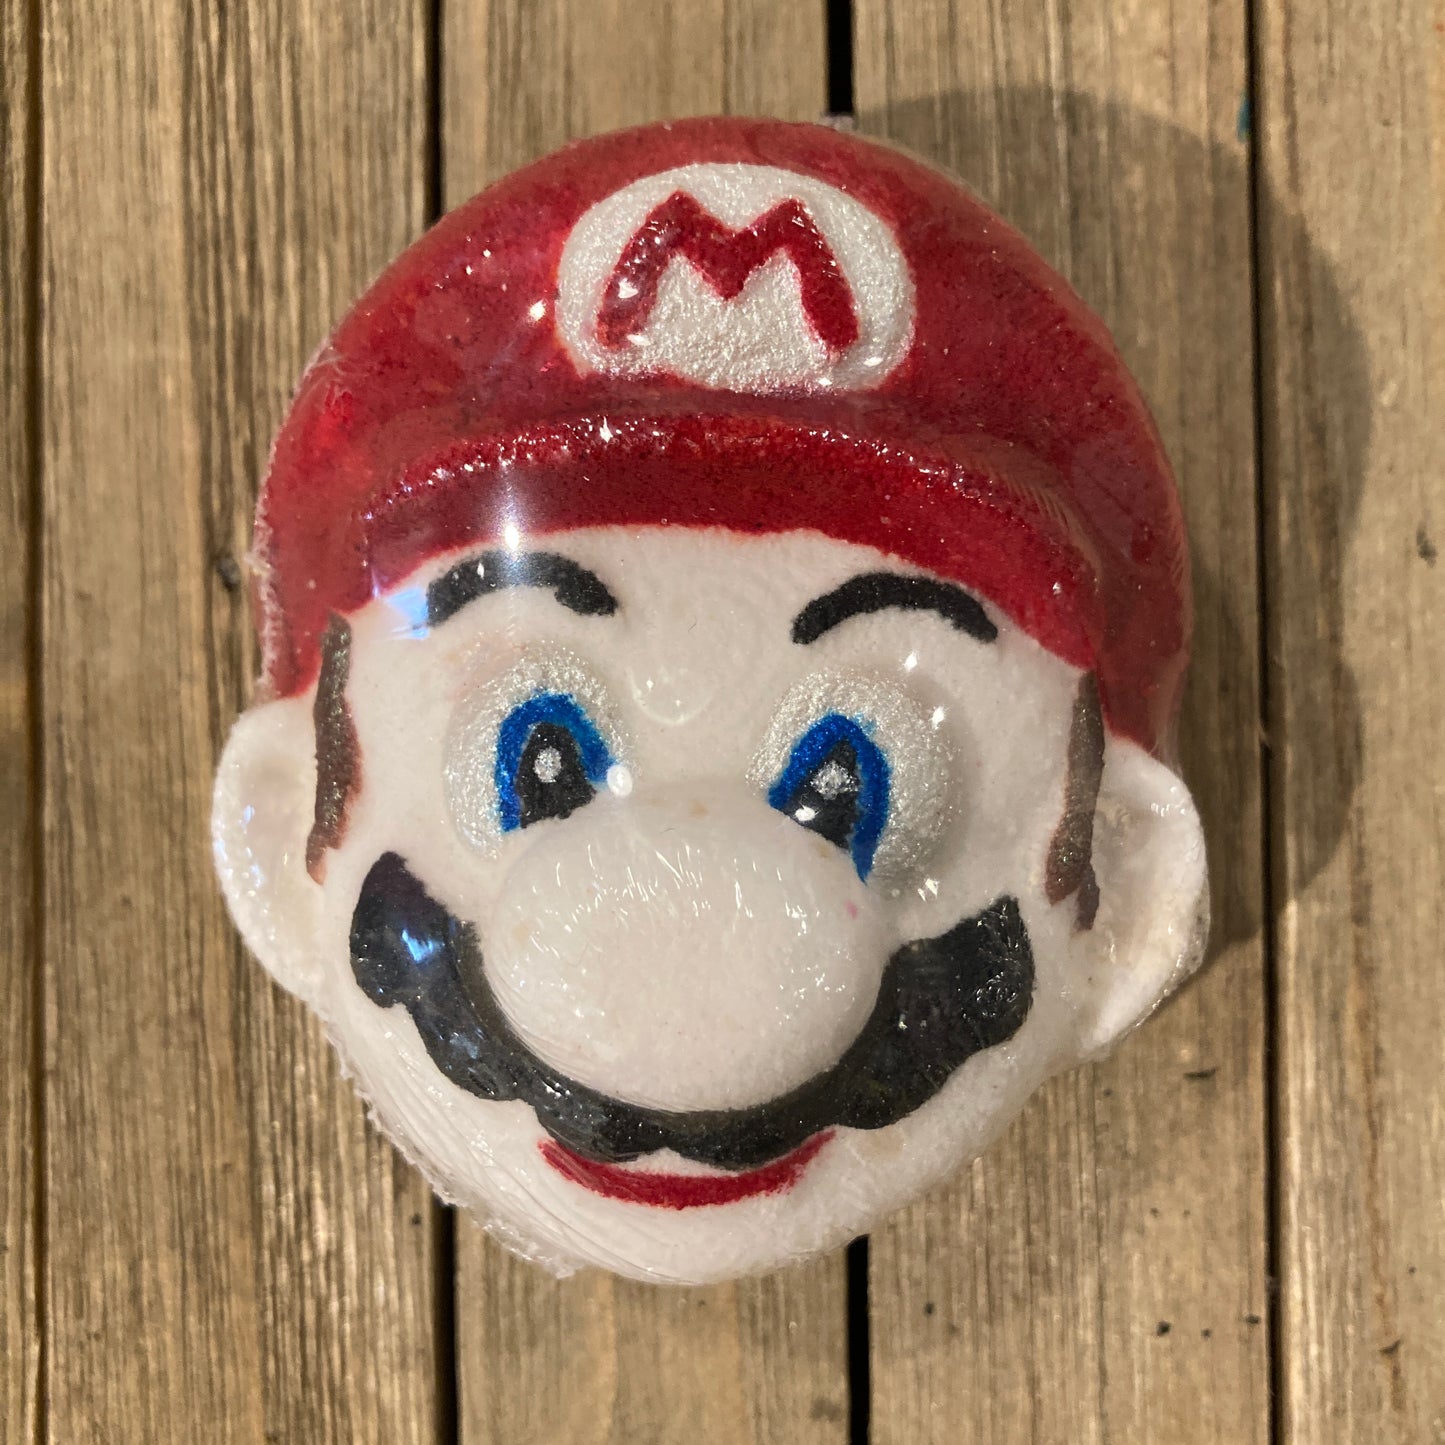 Mario Bath Bomb